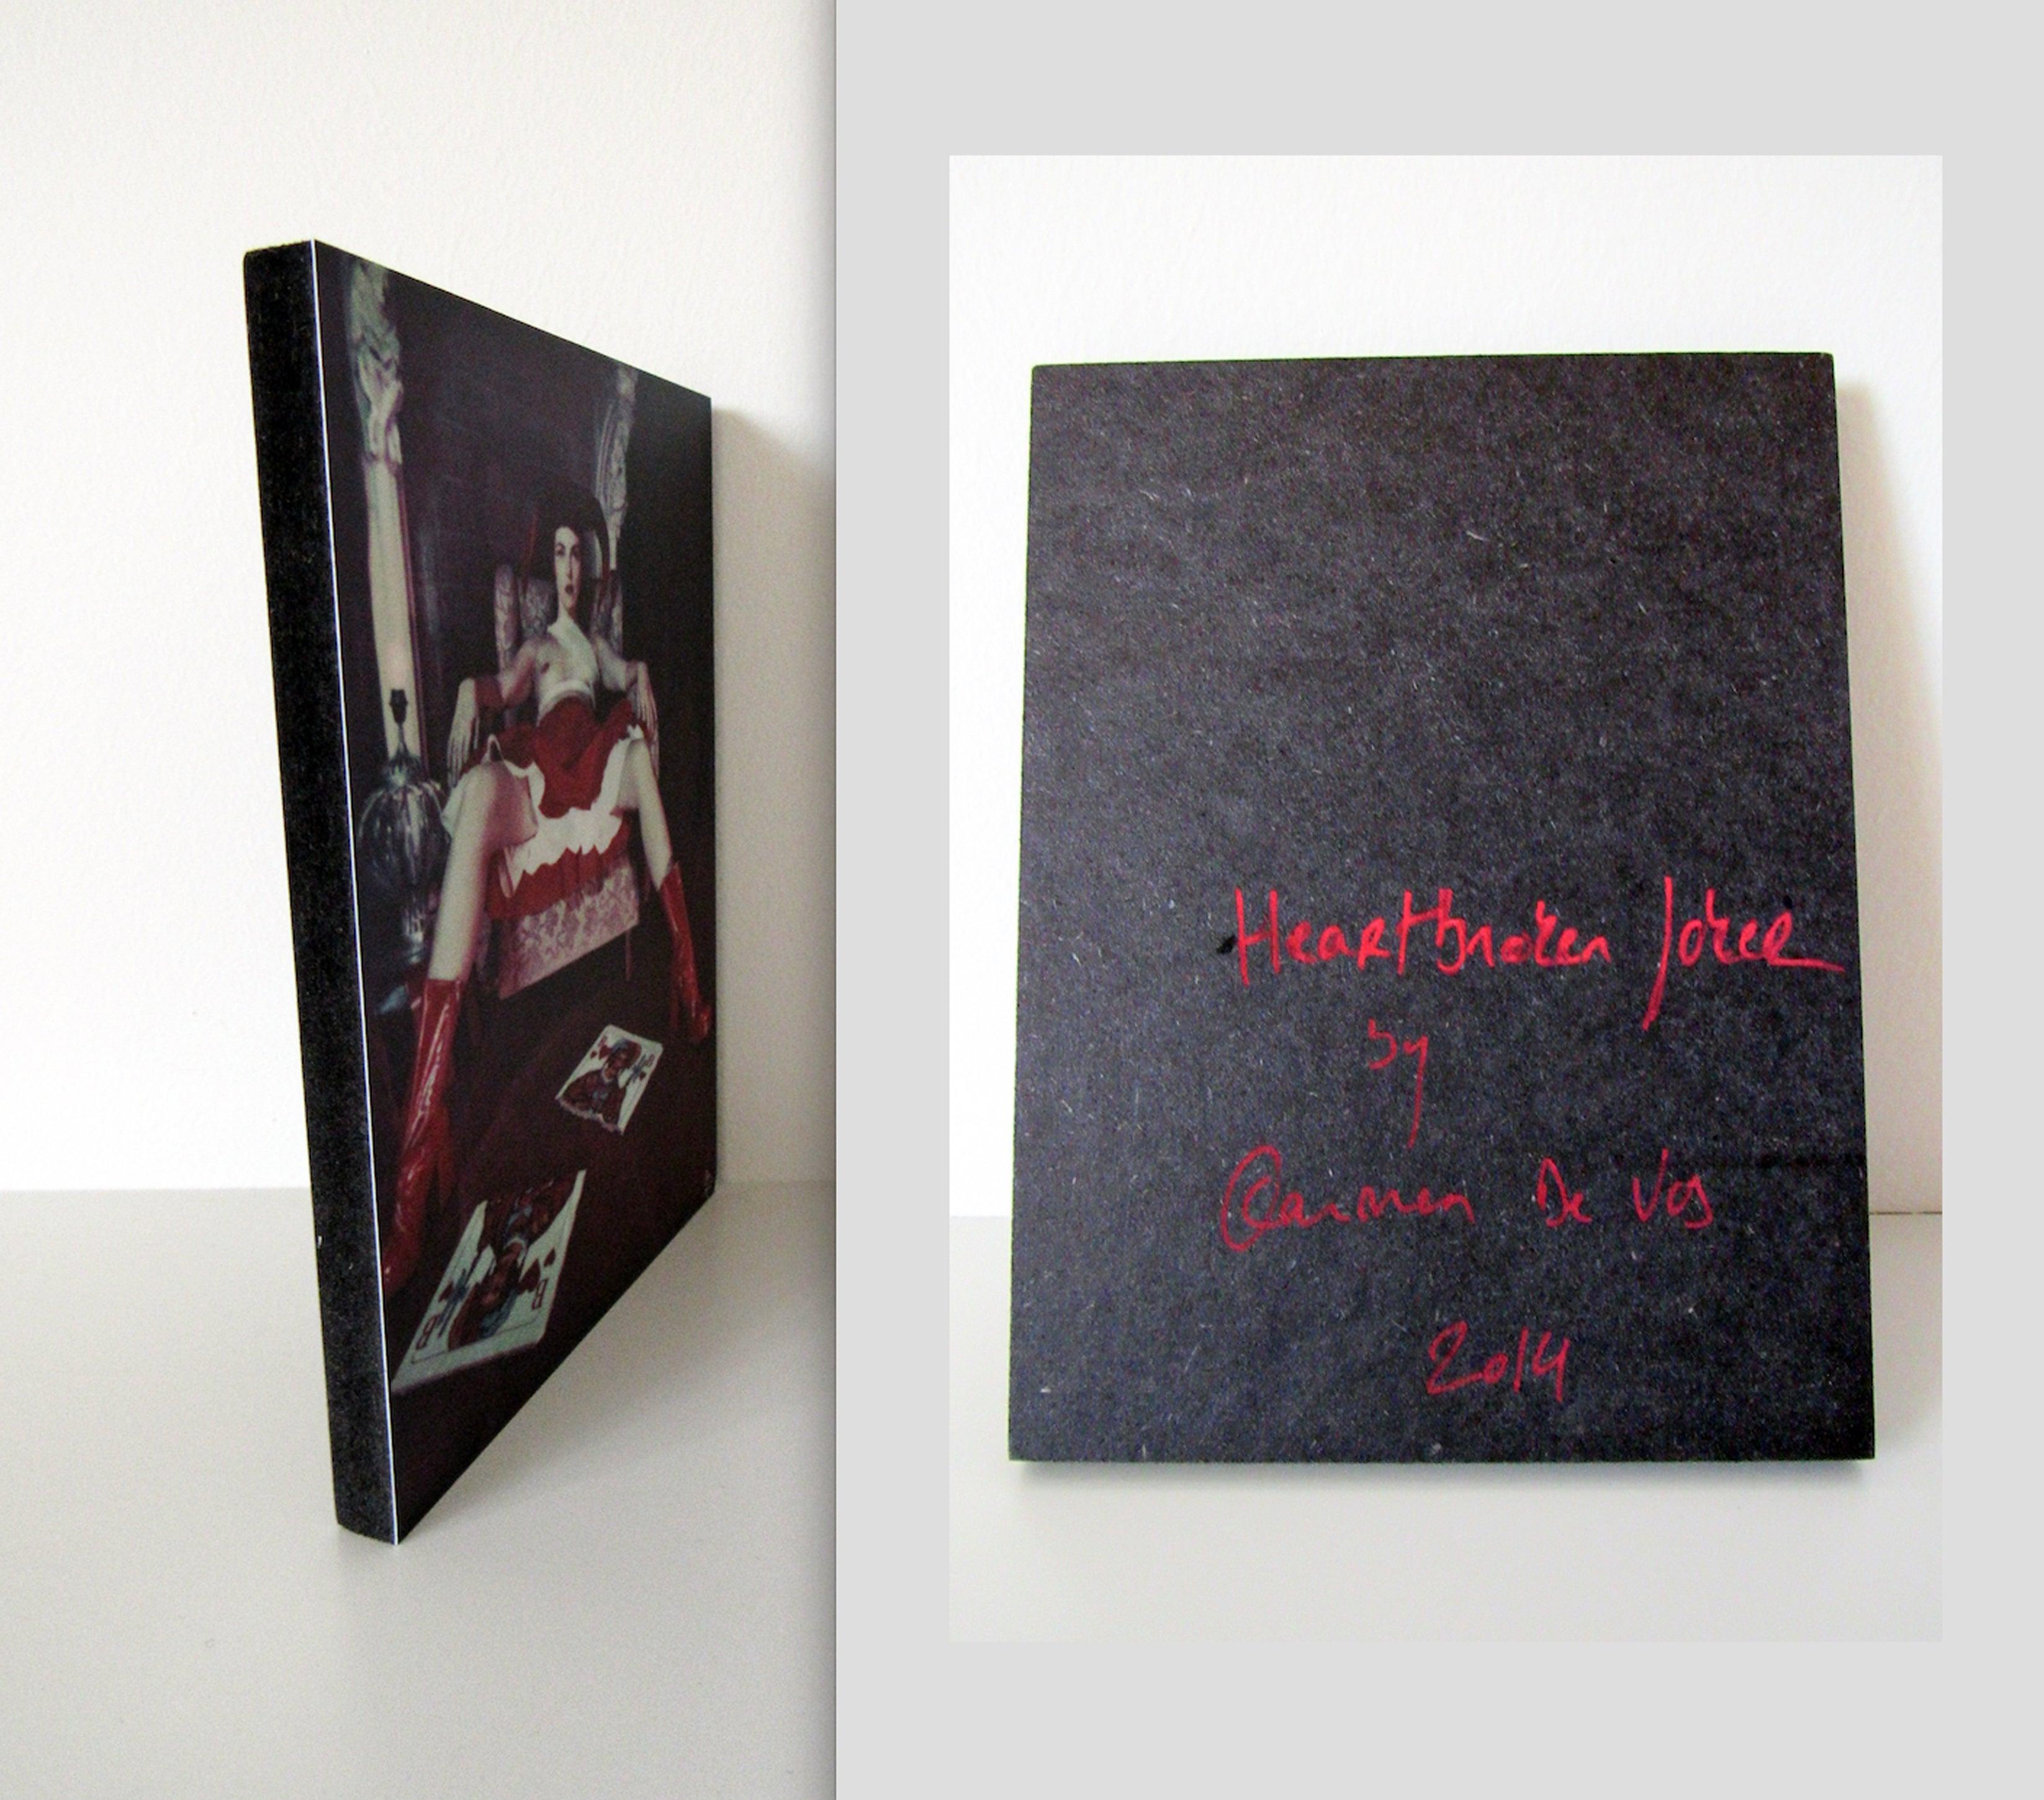 Writer's Block (Odd stories) - Polaroid, Contemporary, 21st Century, Color - Photograph by Carmen de Vos